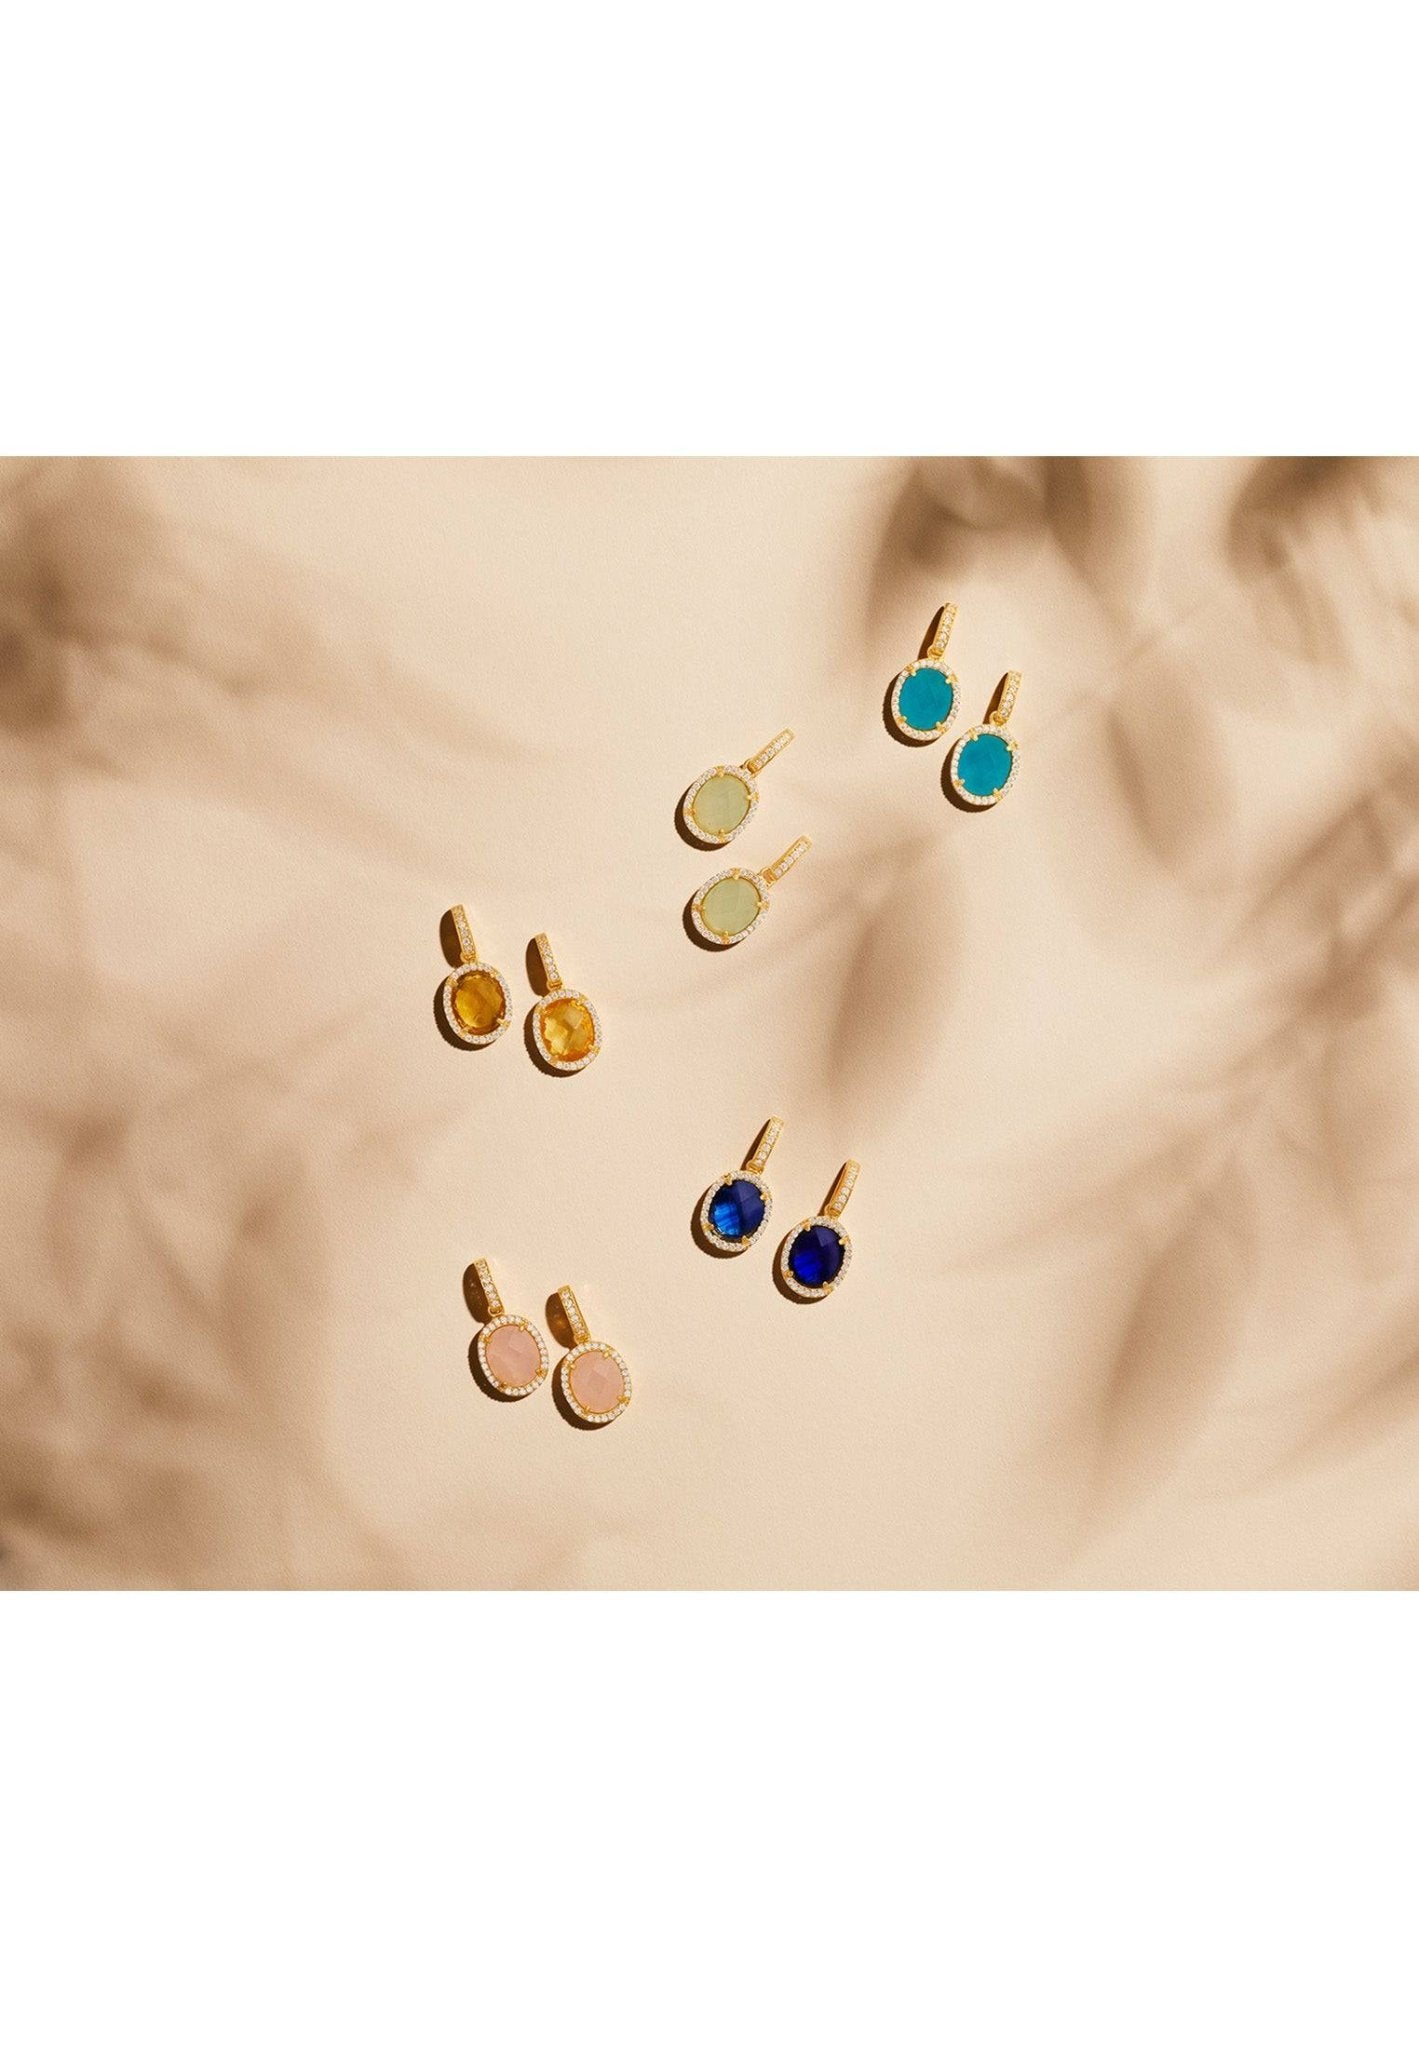 Beatrice Oval Gemstone Drop Earrings Gold Rose Quartz - LATELITA Earrings